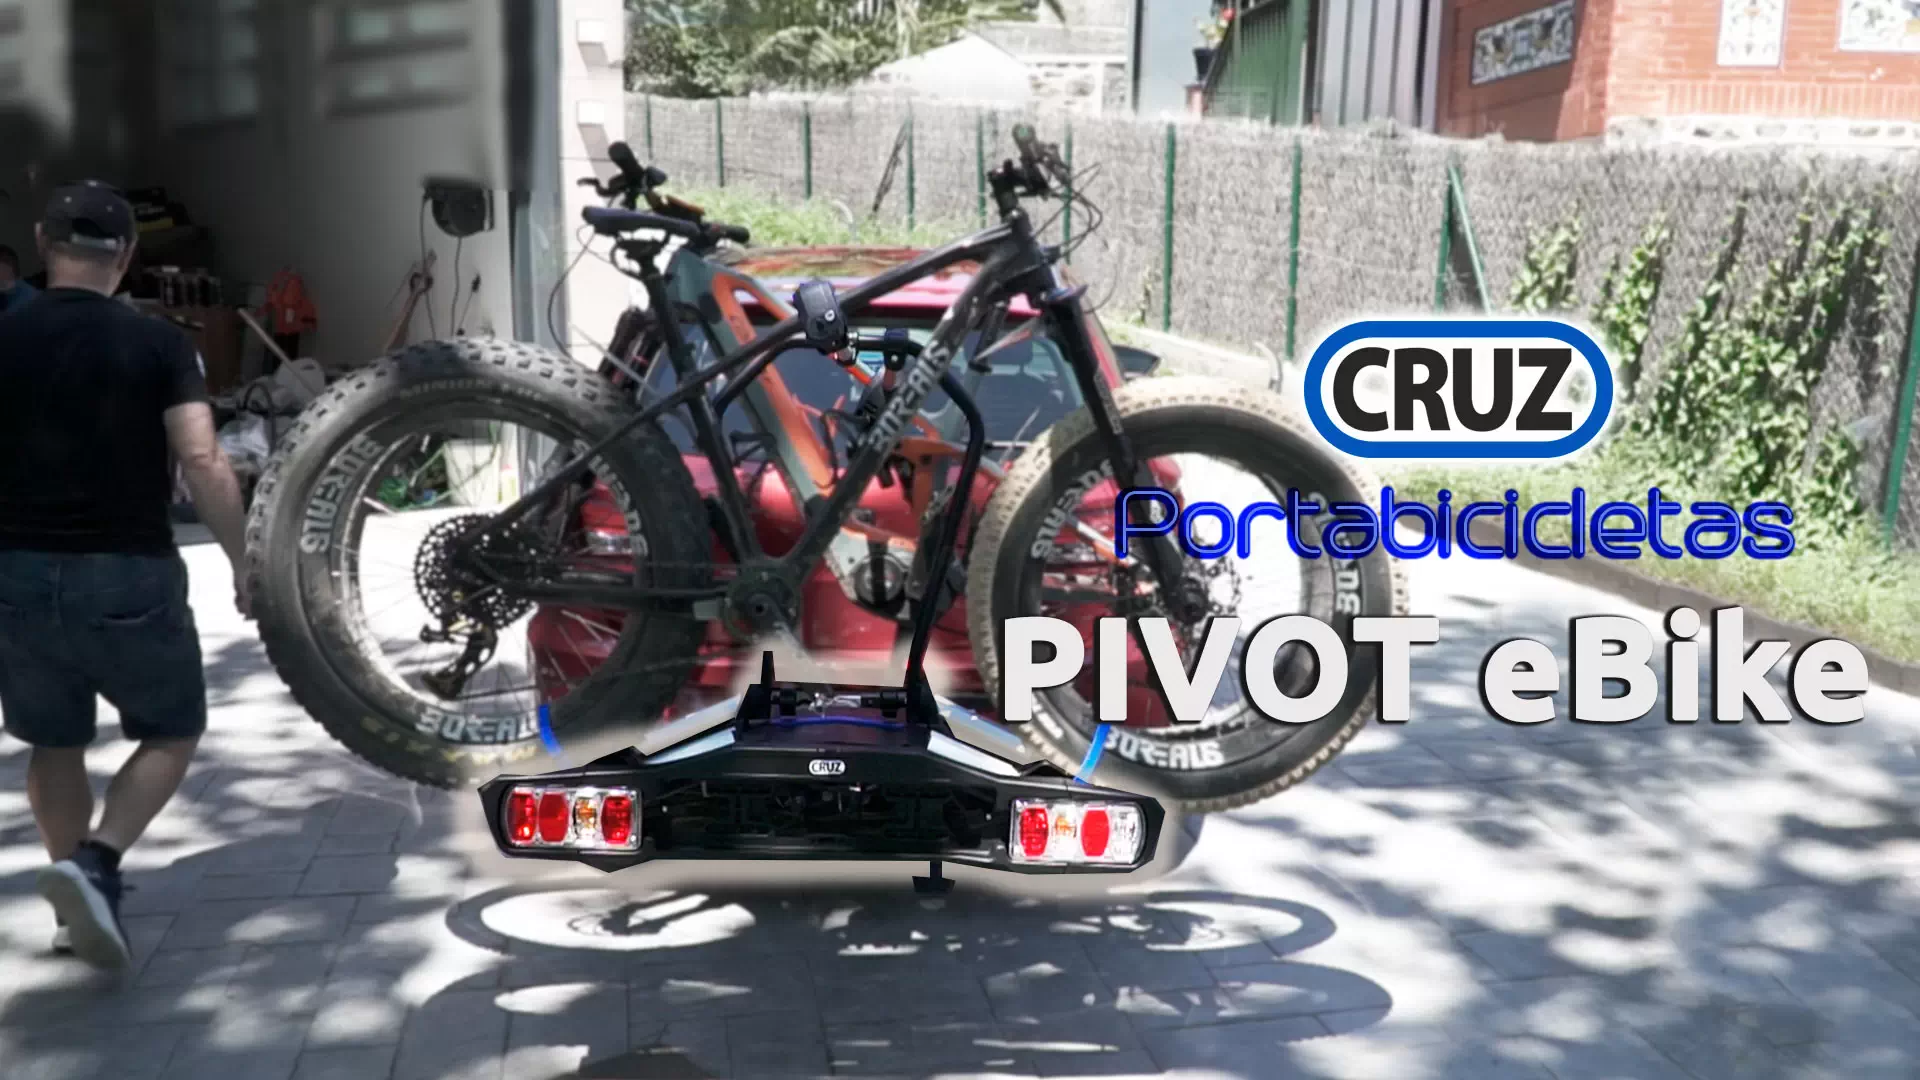 Transporta tus e-bike con el Cruz Pivot ebike 2